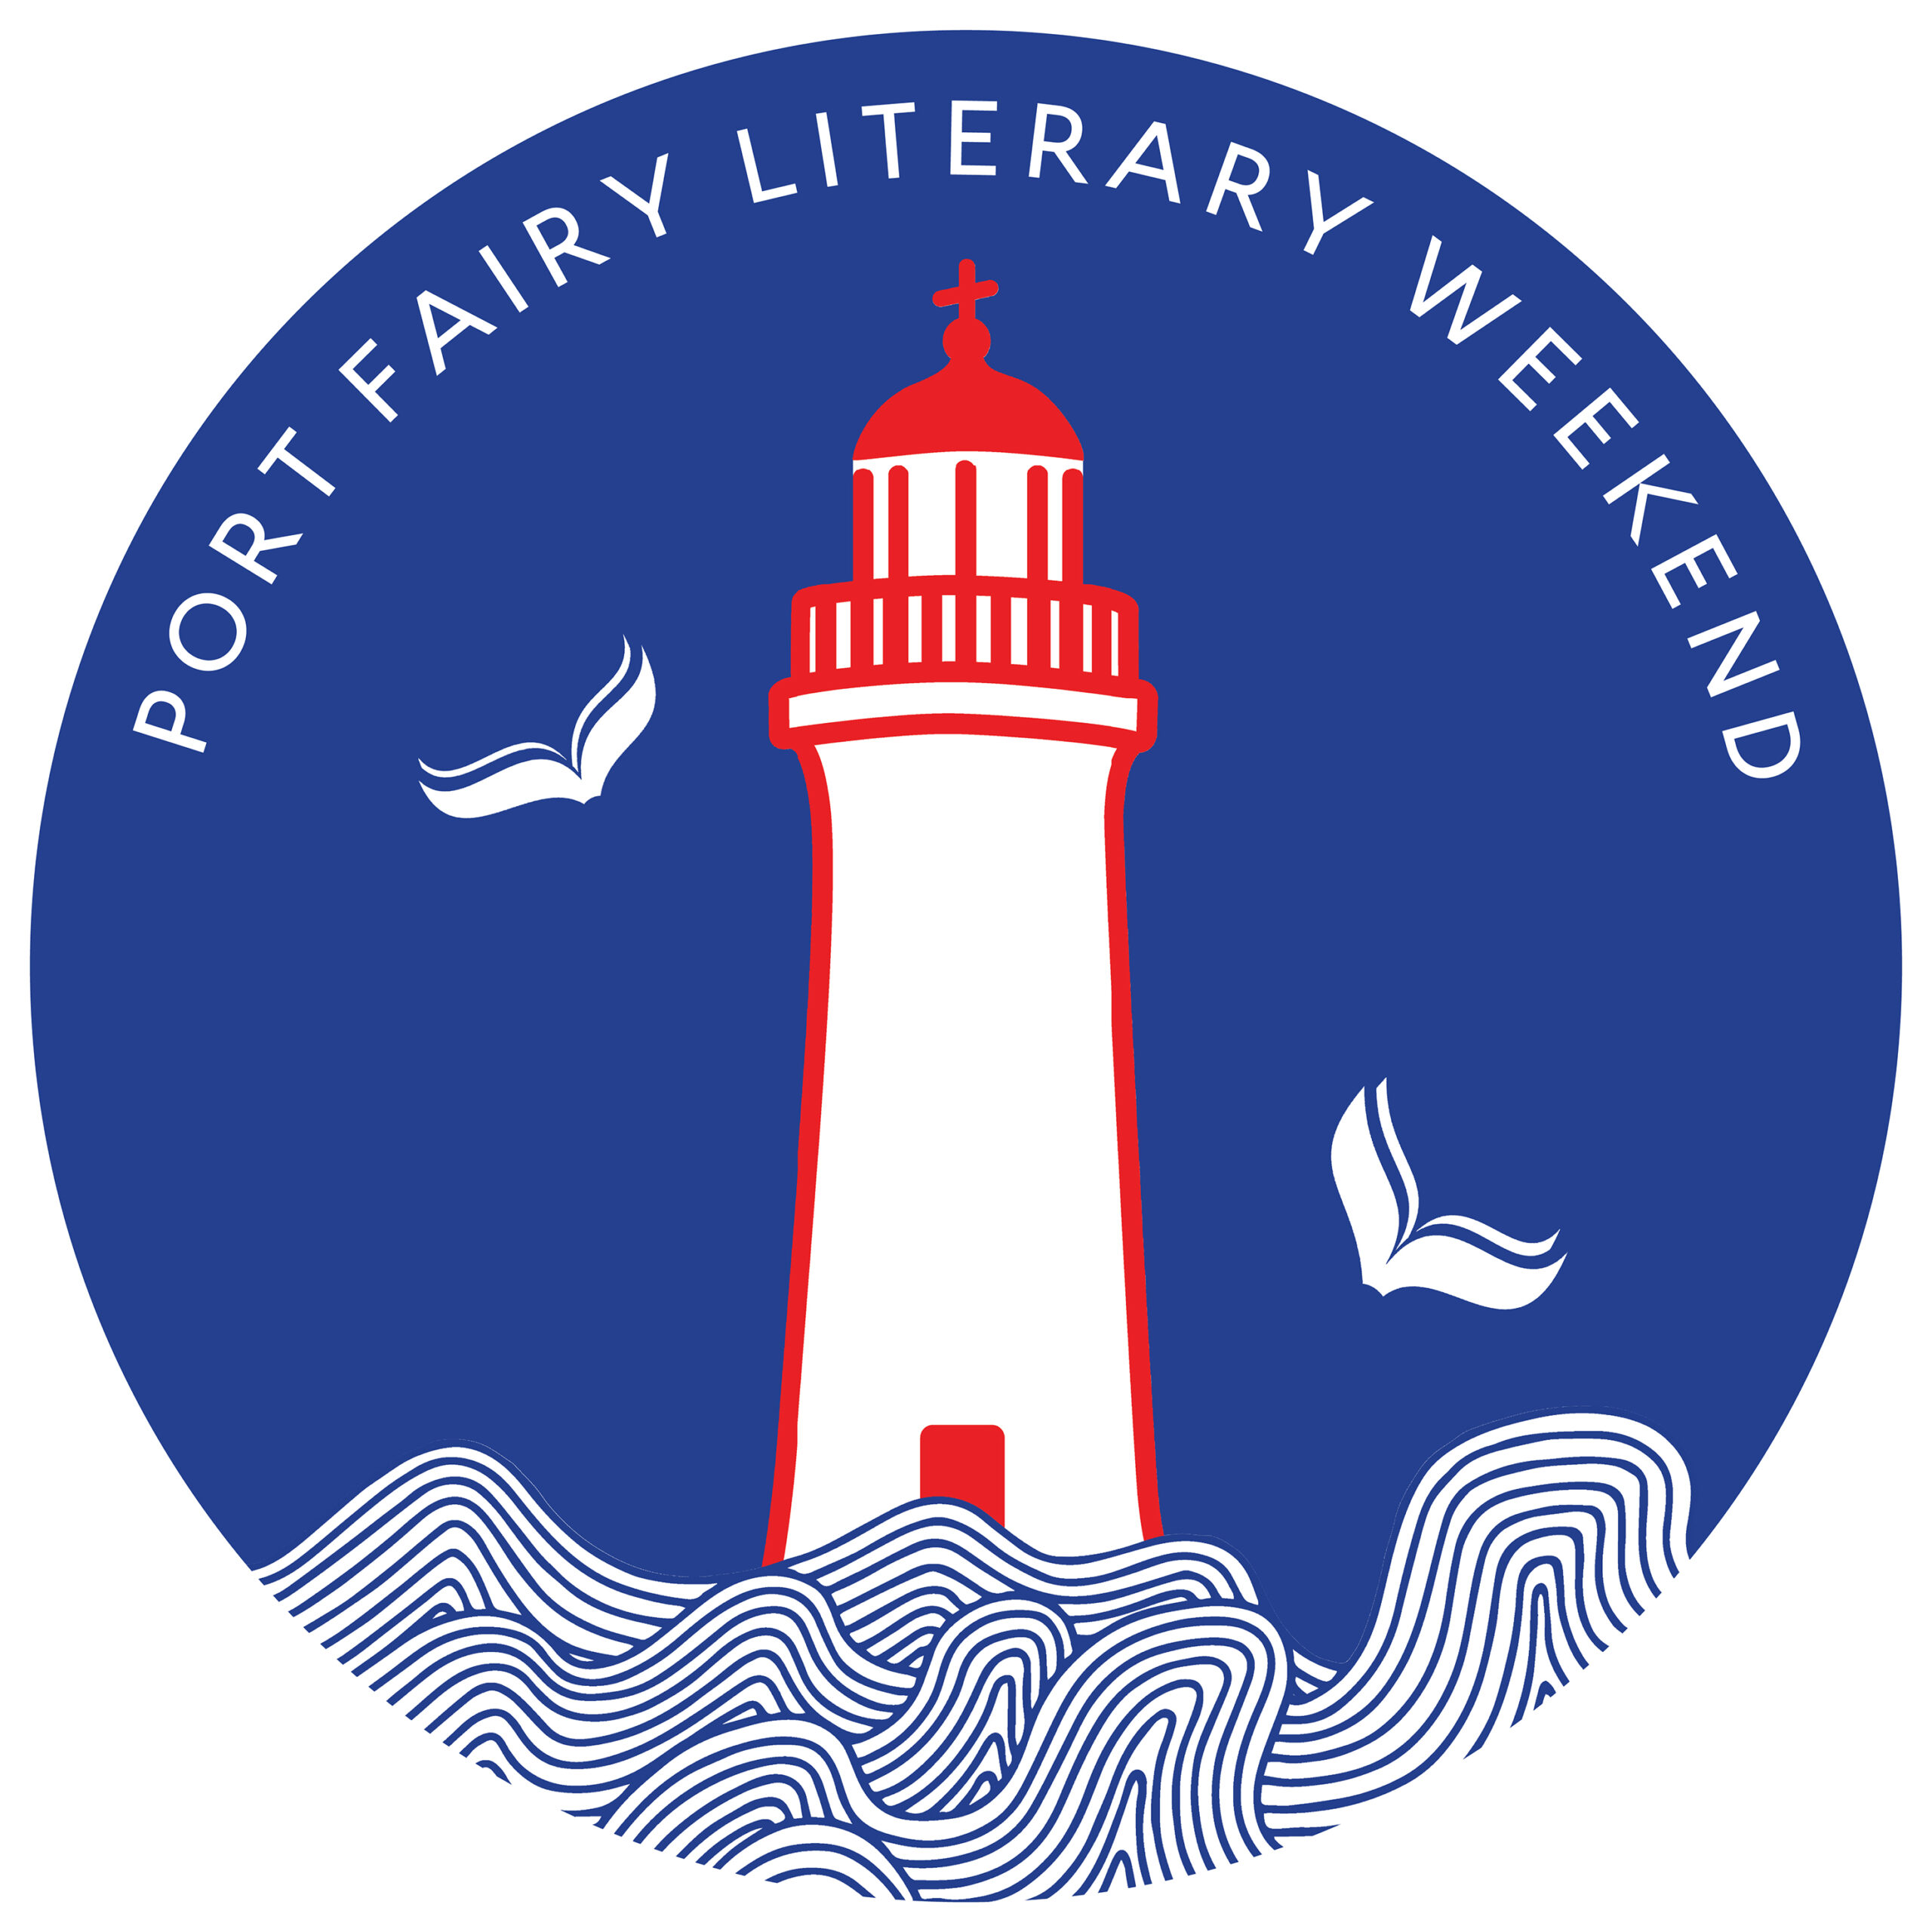 Port Fairy Literary Weekend